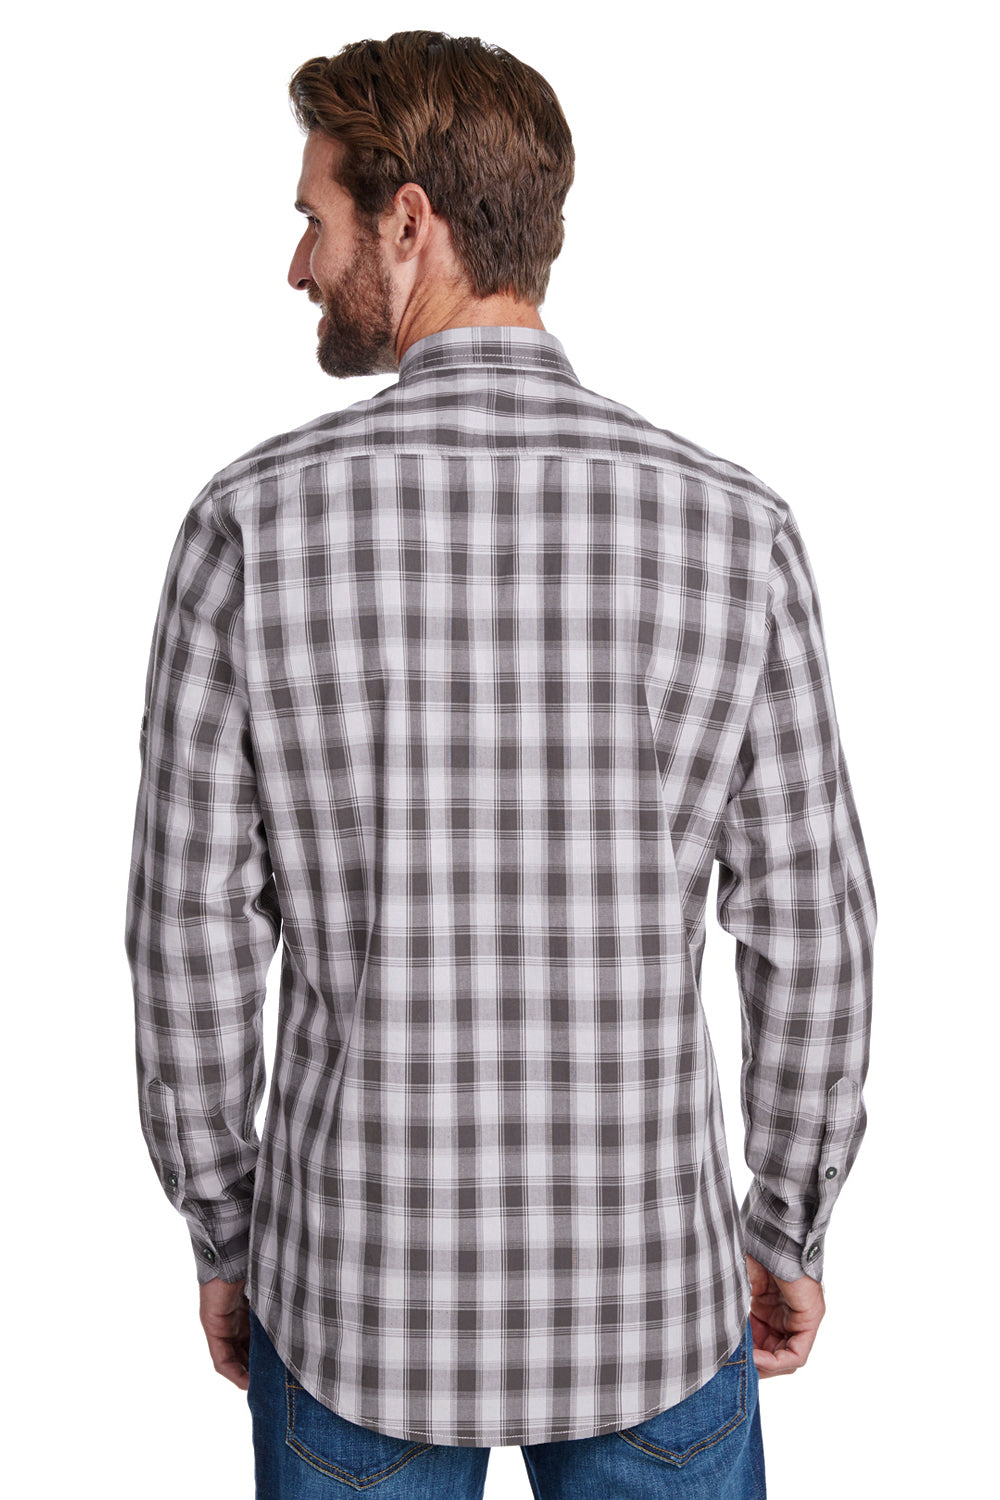 Artisan Collection RP250 Mens Mulligan Check Long Sleeve Button Down Shirt Steel Grey/Black Model Back